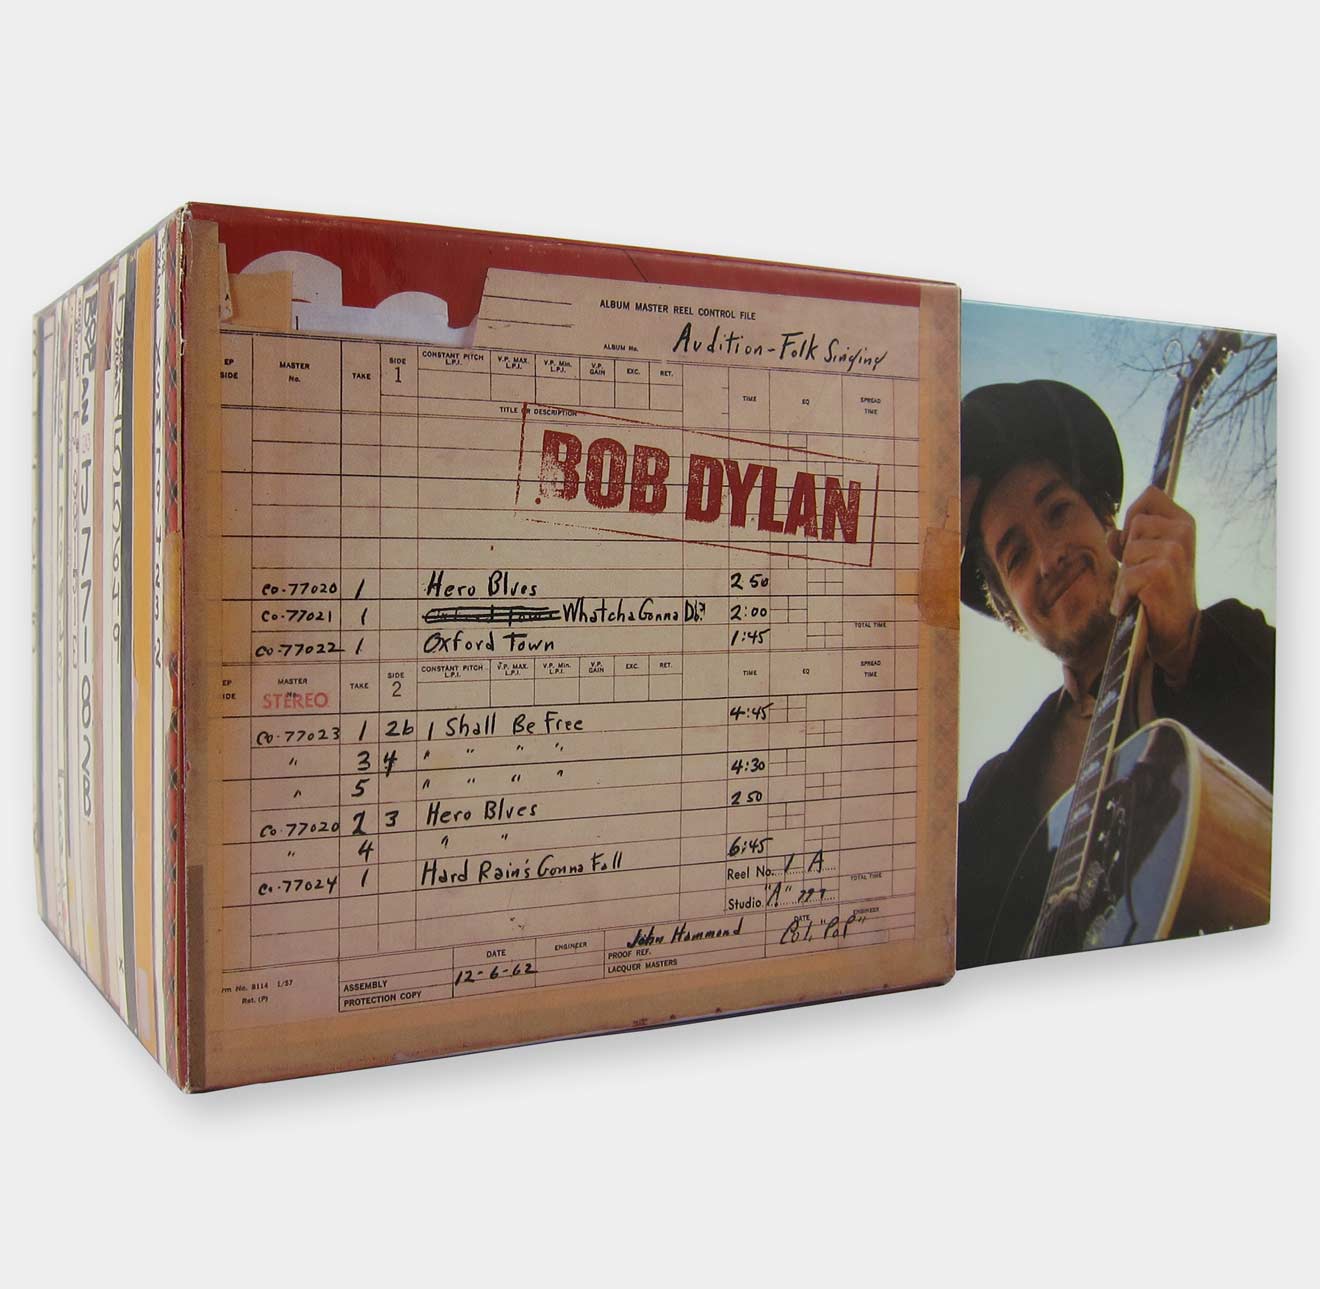 Bob Dylan boxset